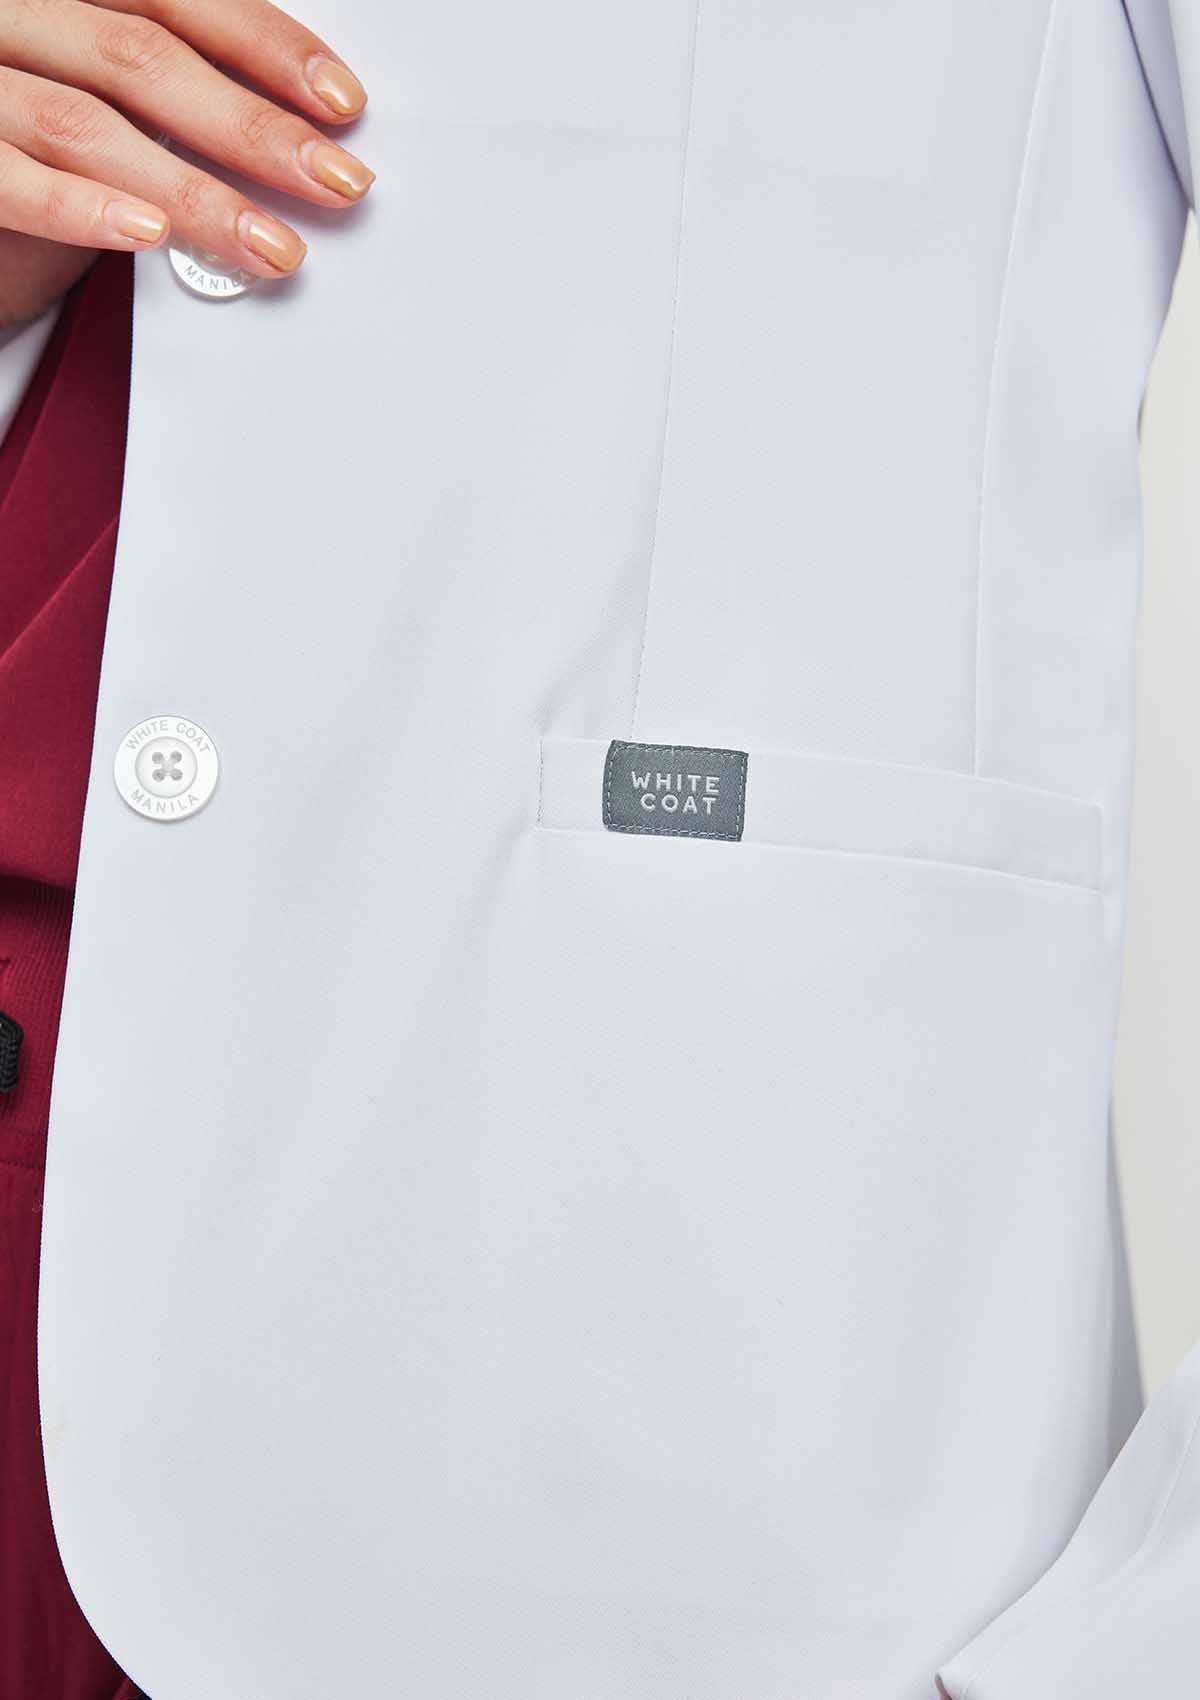 Long Sleeves Blazer Pro+® - Women / White